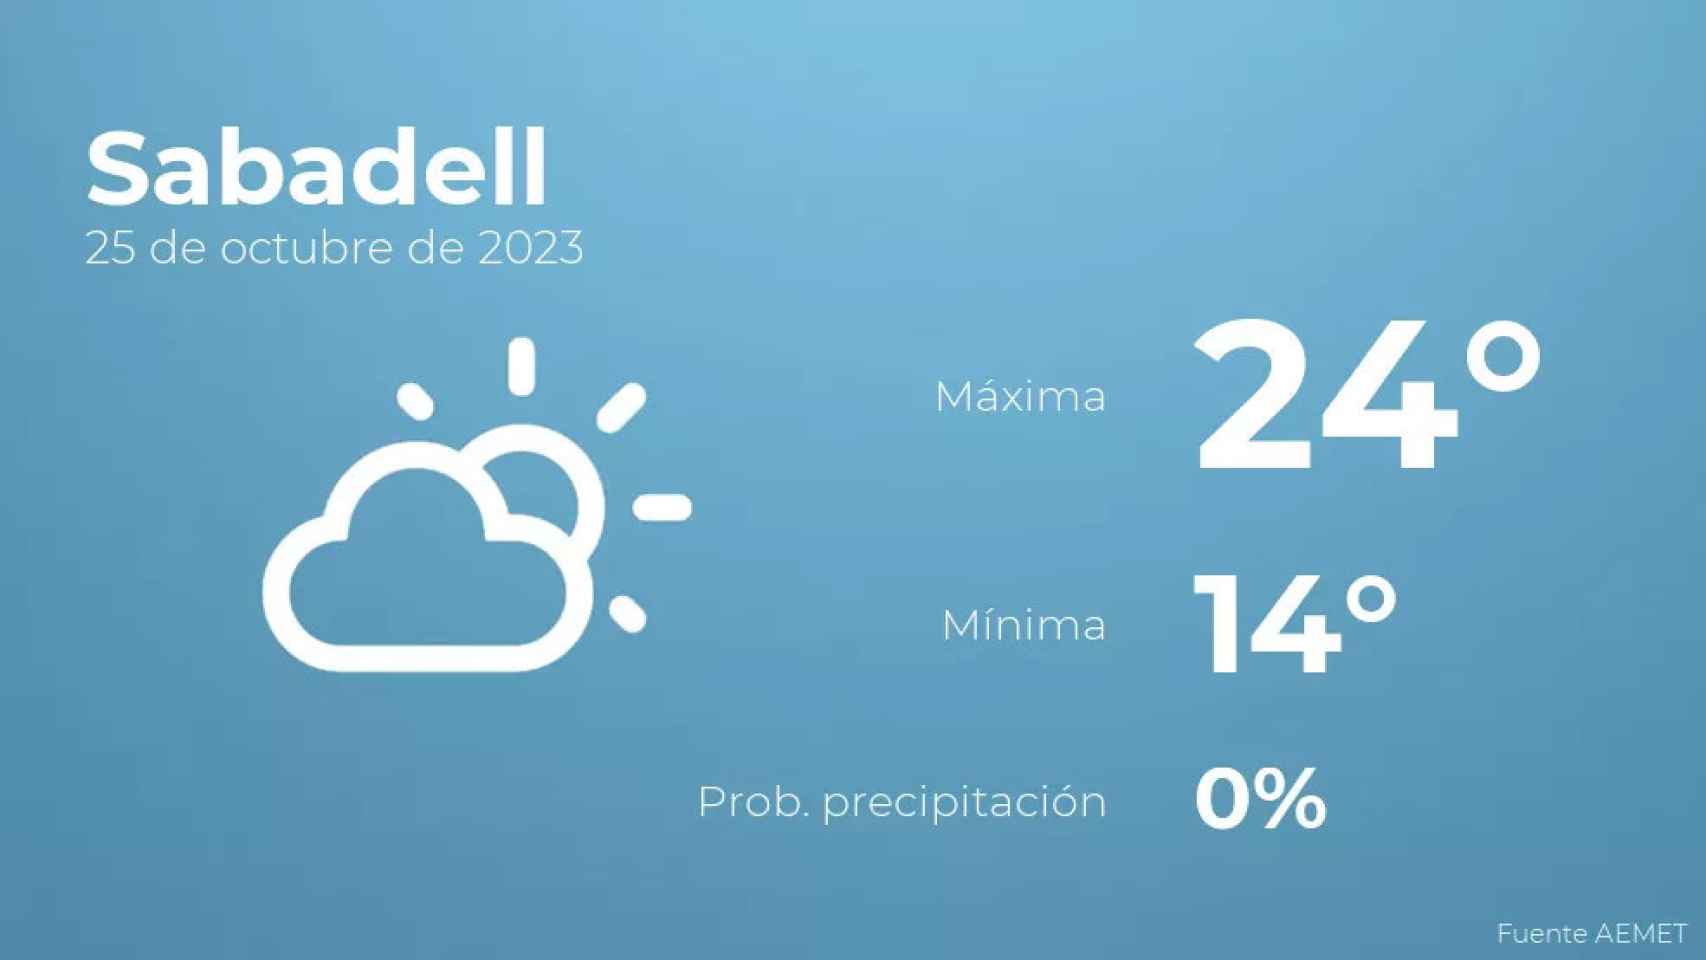 weather?weatherid=12&tempmax=24&tempmin=14&prep=0&city=Sabadell&date=25+de+octubre+de+2023&client=CRG&data provider=aemet